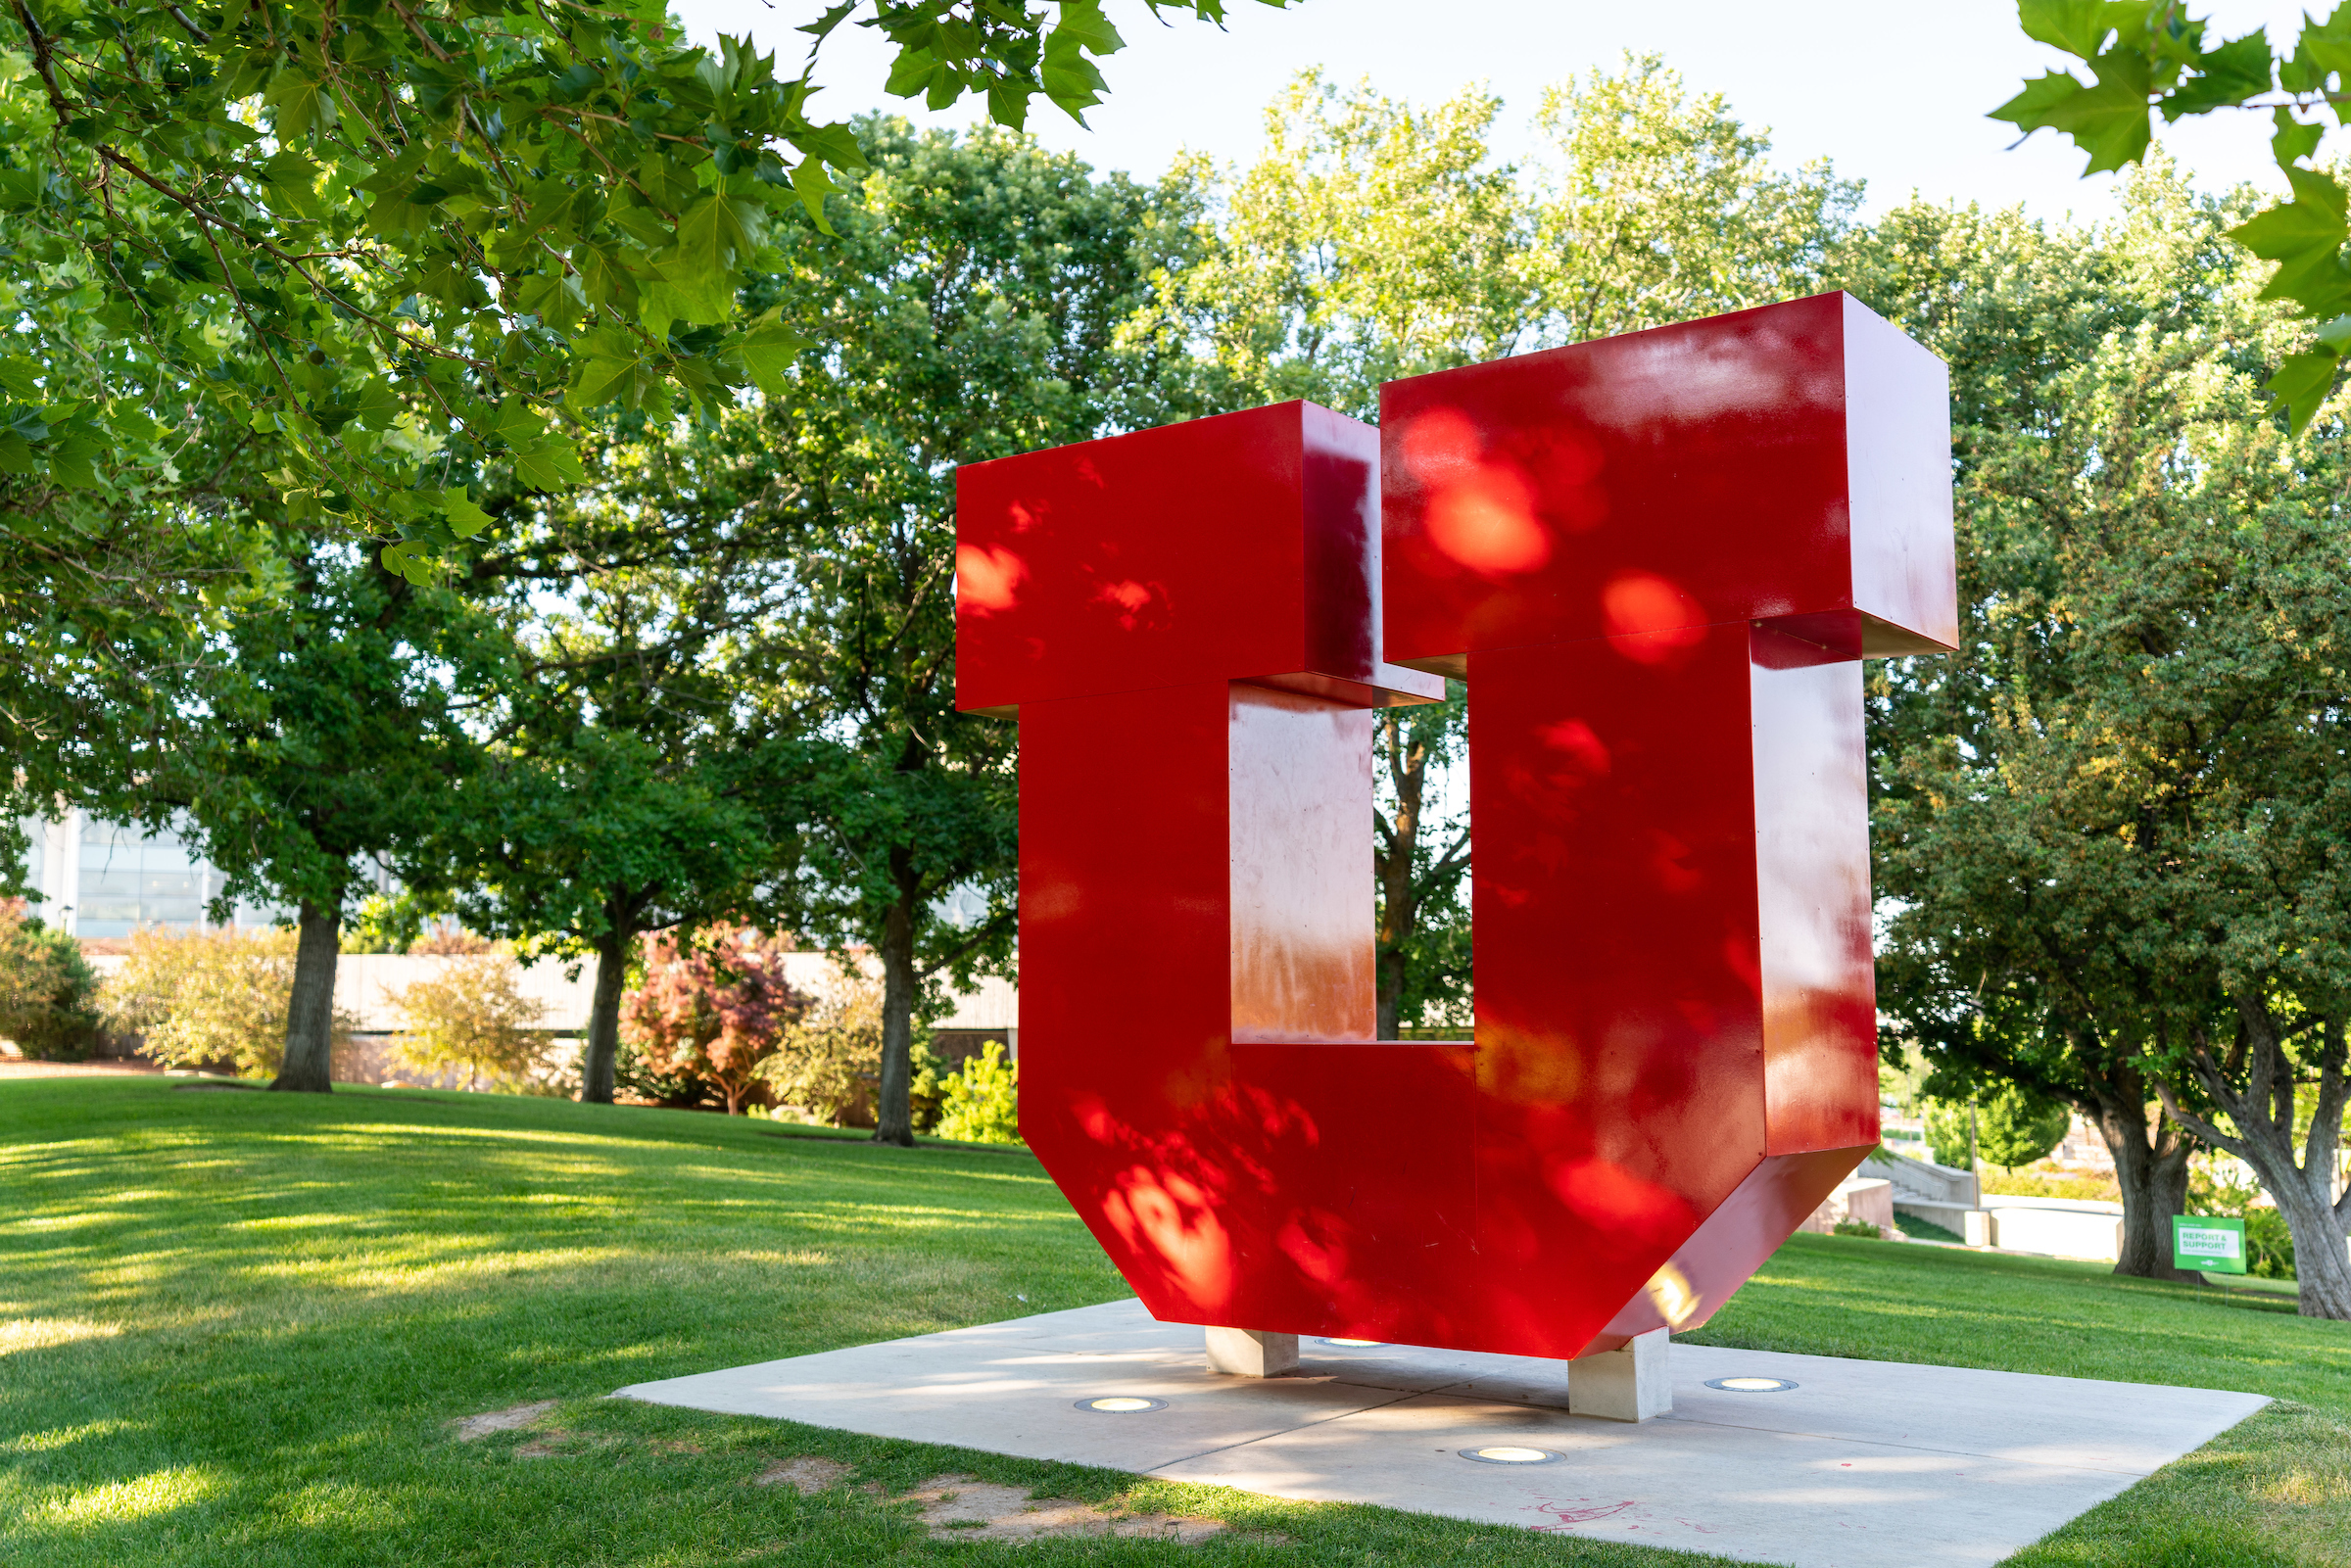 image of the Block U installation on the University of Utah campus